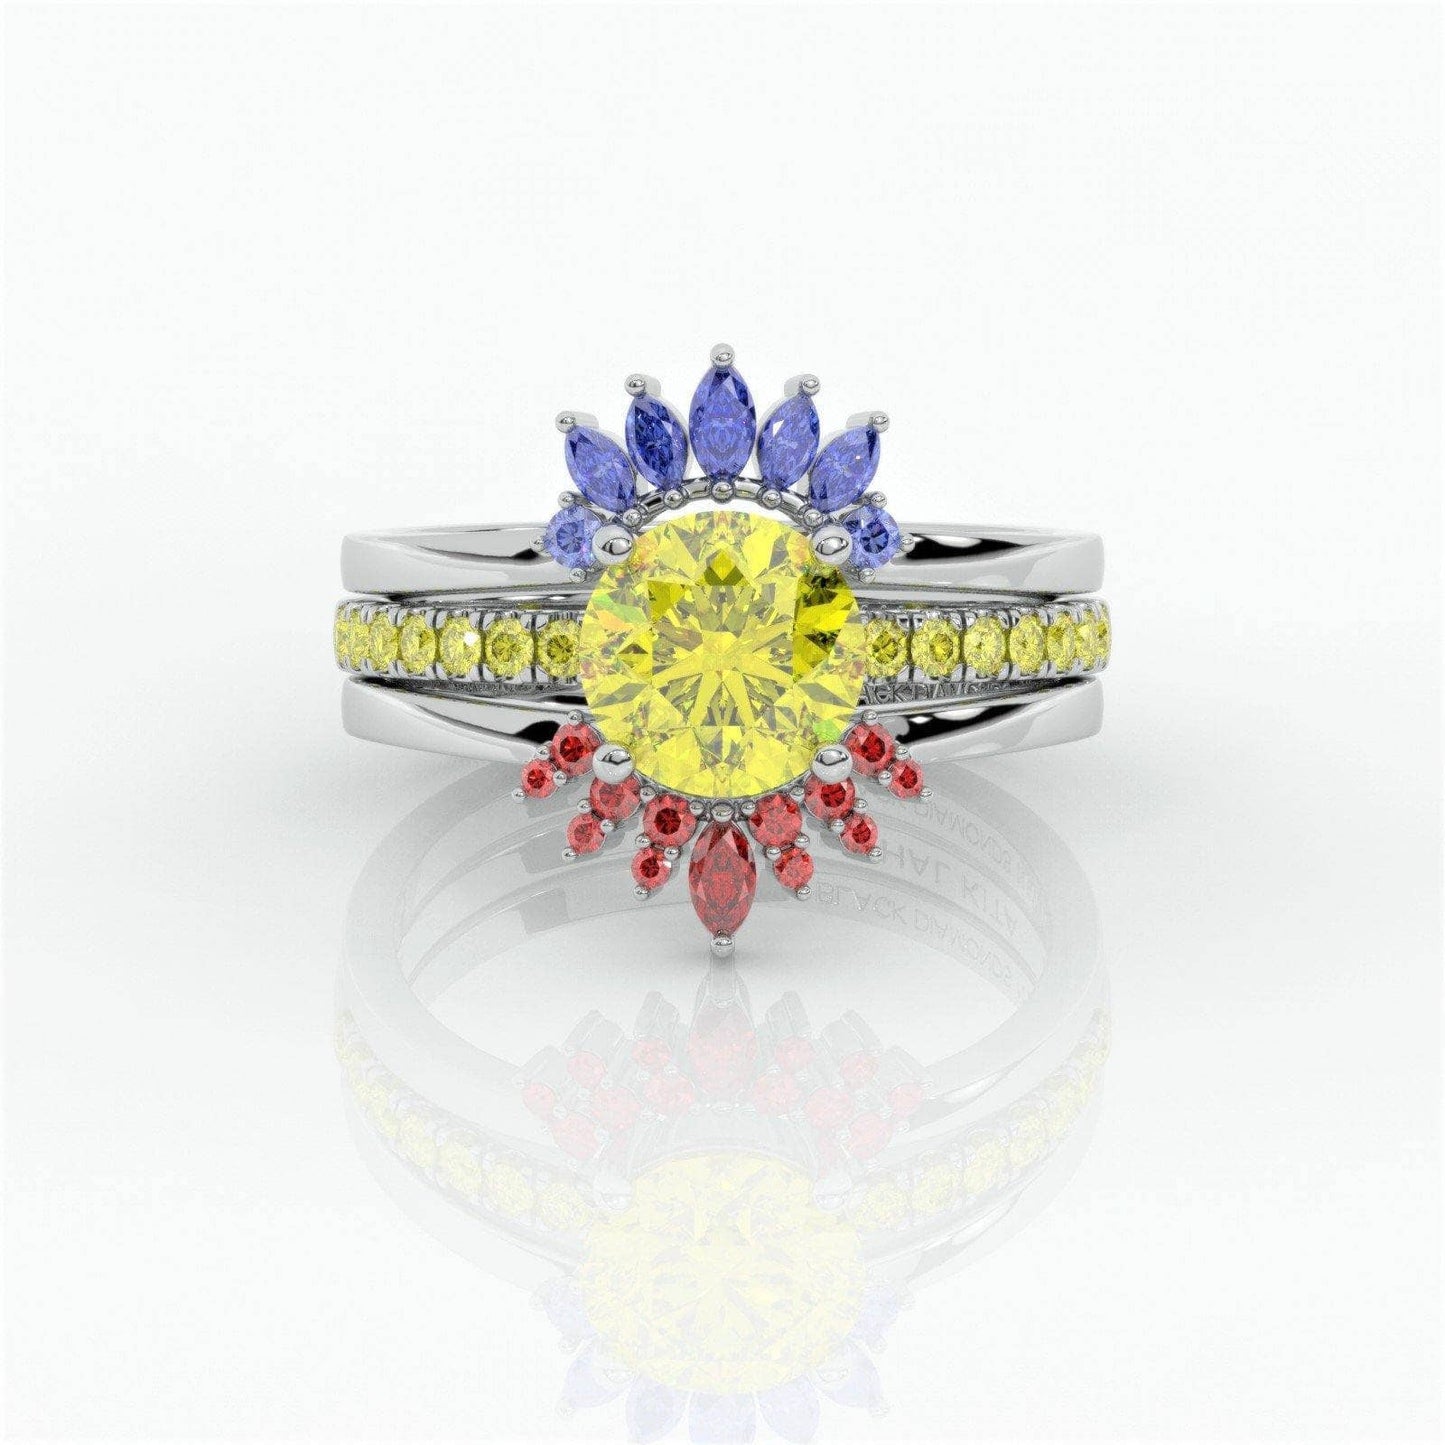 Mahal Kita (I LOVE YOU)- Rare Yellow Round Diamond Love Language Ring Set-Black Diamonds New York